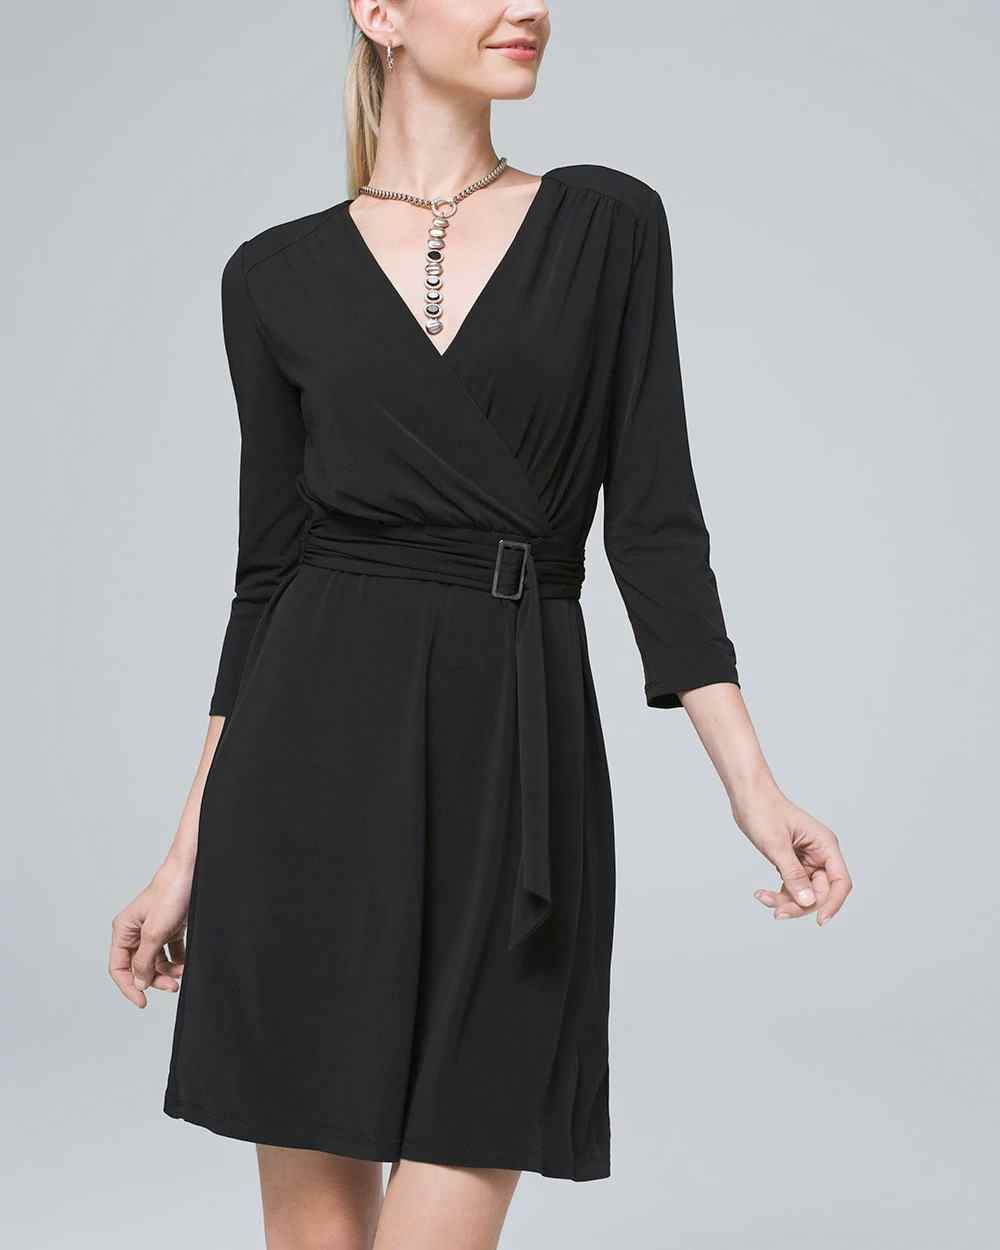 Petite Matte Jersey Belted Surplice Dress | White House Black Market